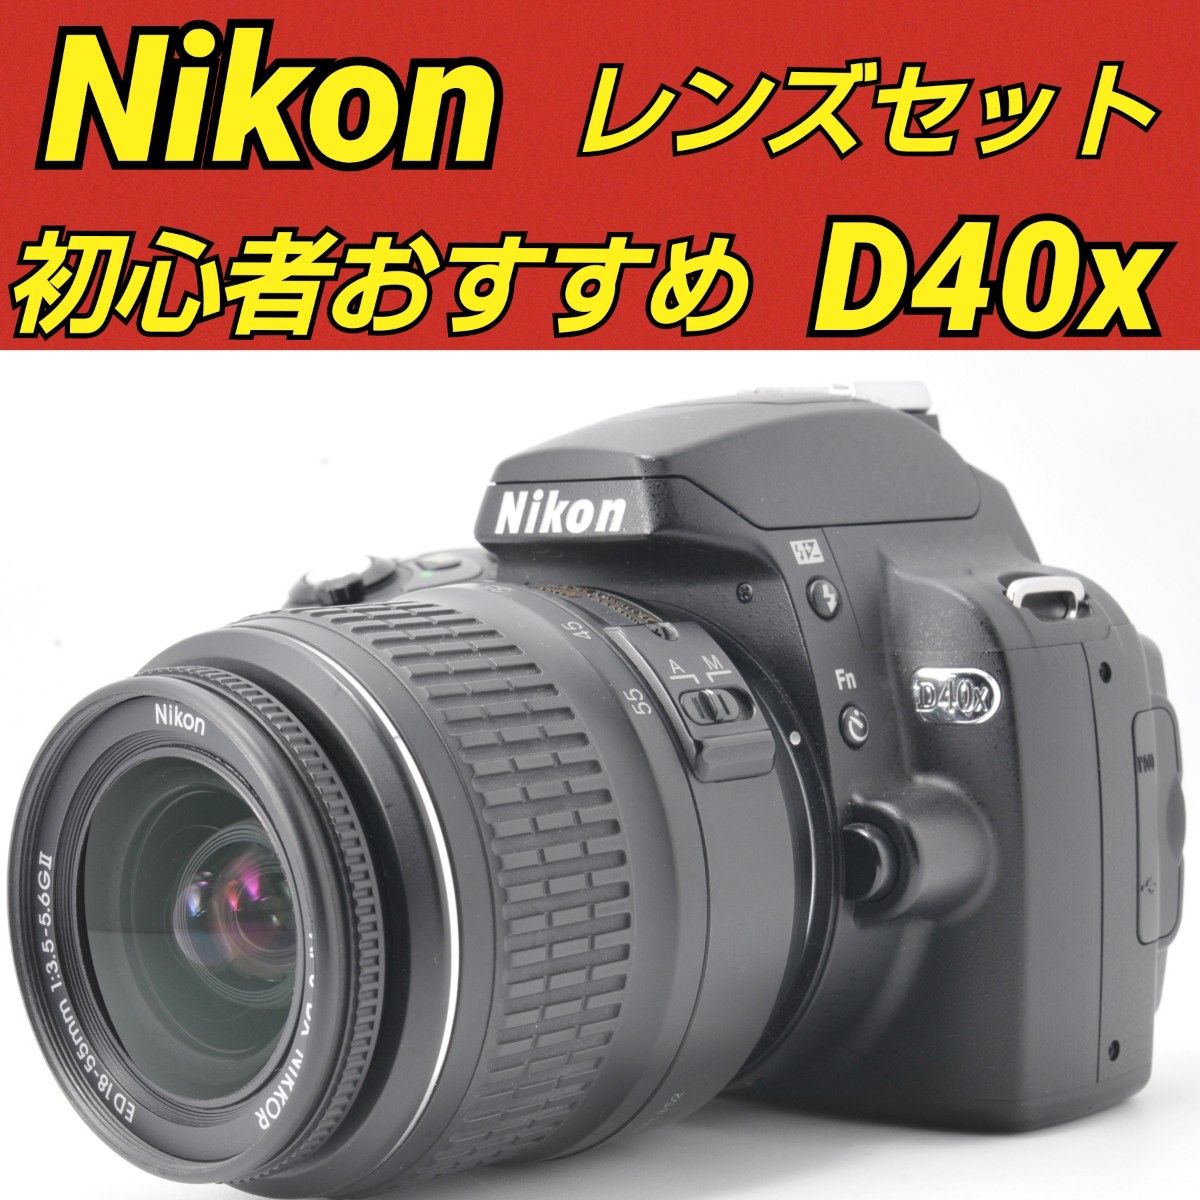 Canon EOS Kiss X2 レンズセット 初心者も安心 一眼レフデビュー 